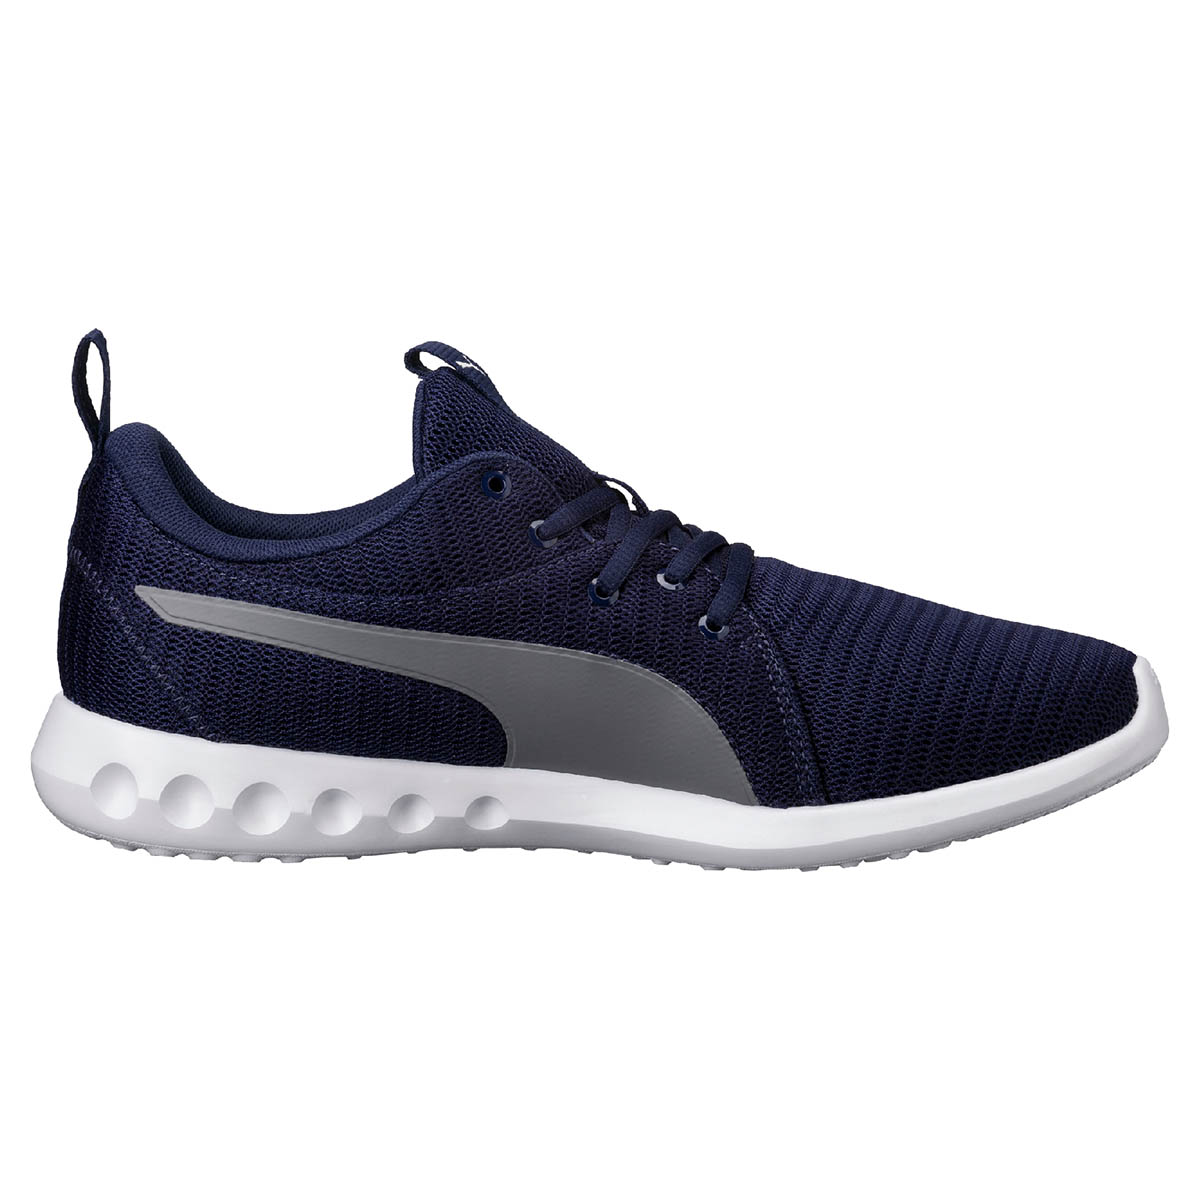 Puma Carson 2 Unisex Fitness Schuhe Sneaker 190037 03 Laufschuh blau